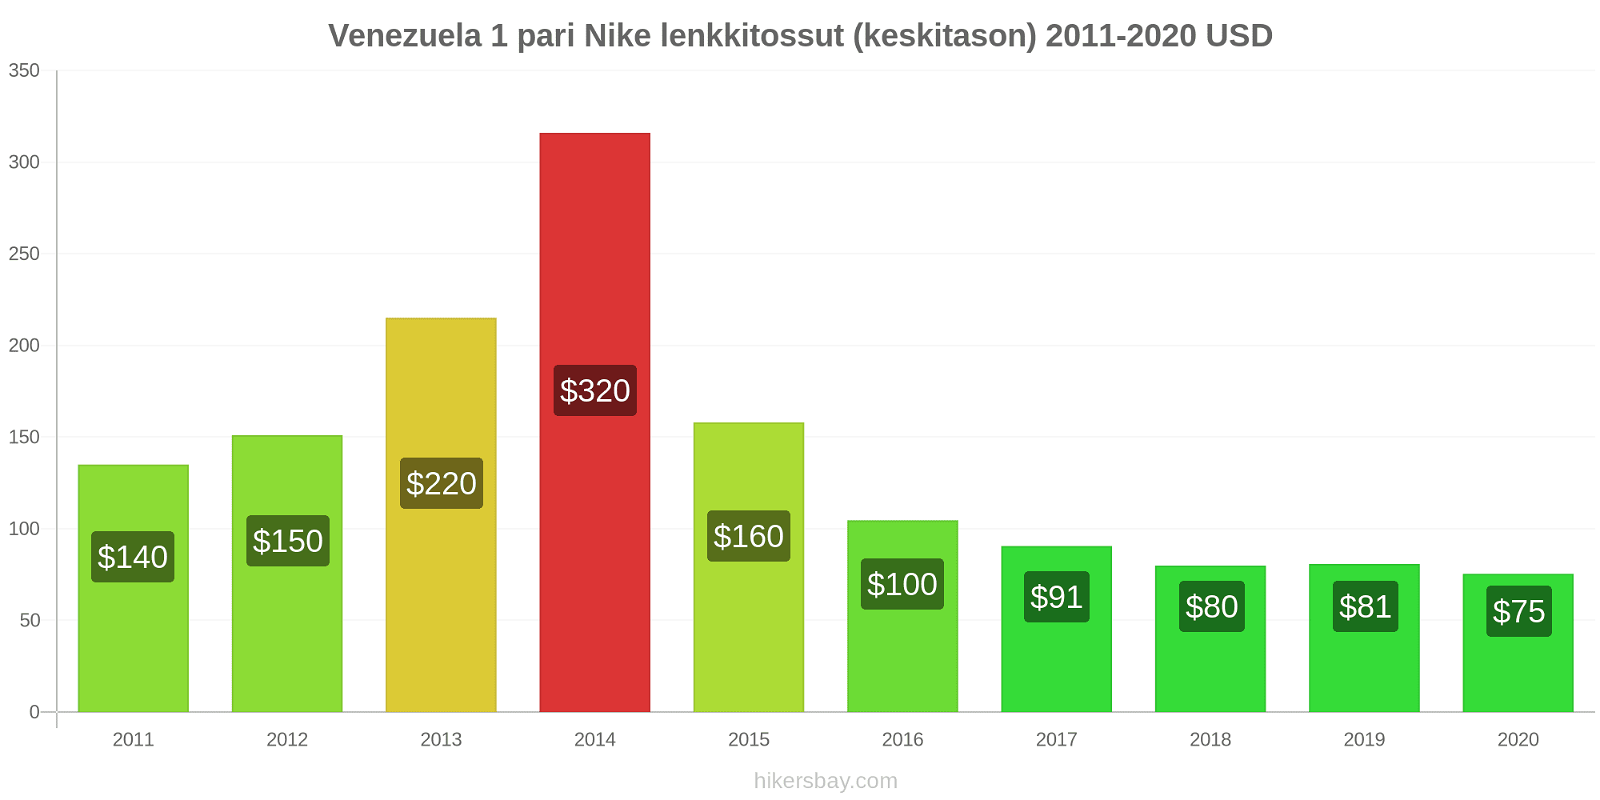 Venezuela hintojen muutokset 1 pari Nike lenkkitossut (keskitason) hikersbay.com